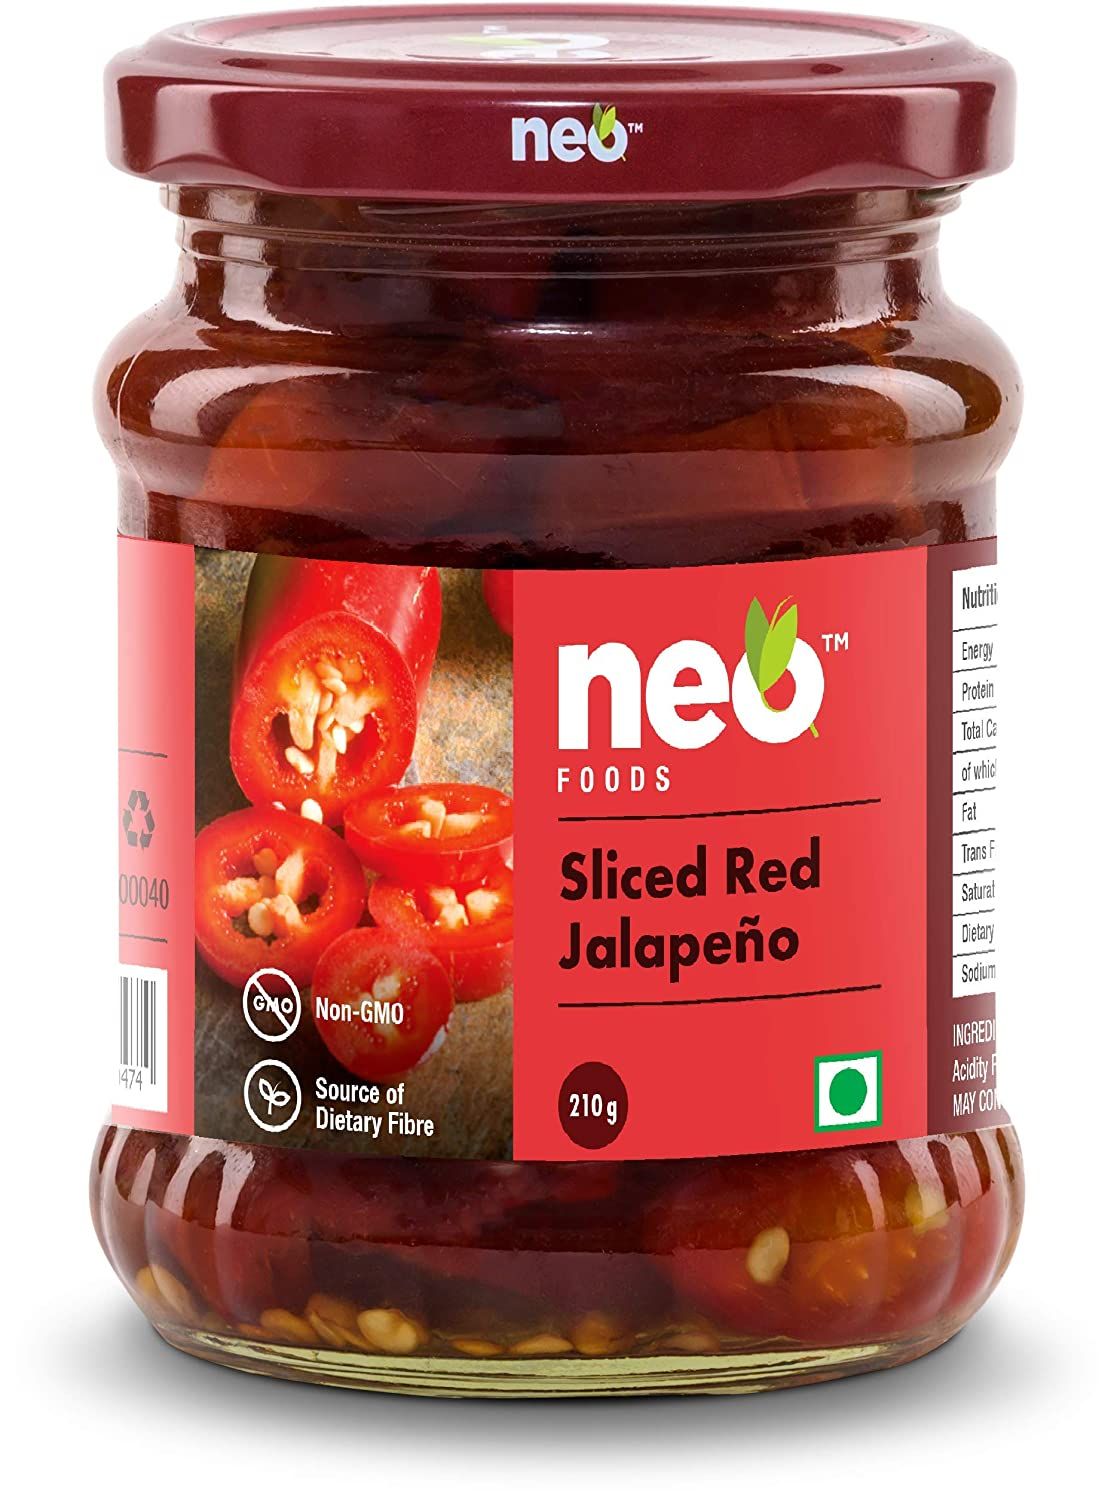 Neo Food Sliced Red Jalapenos Image